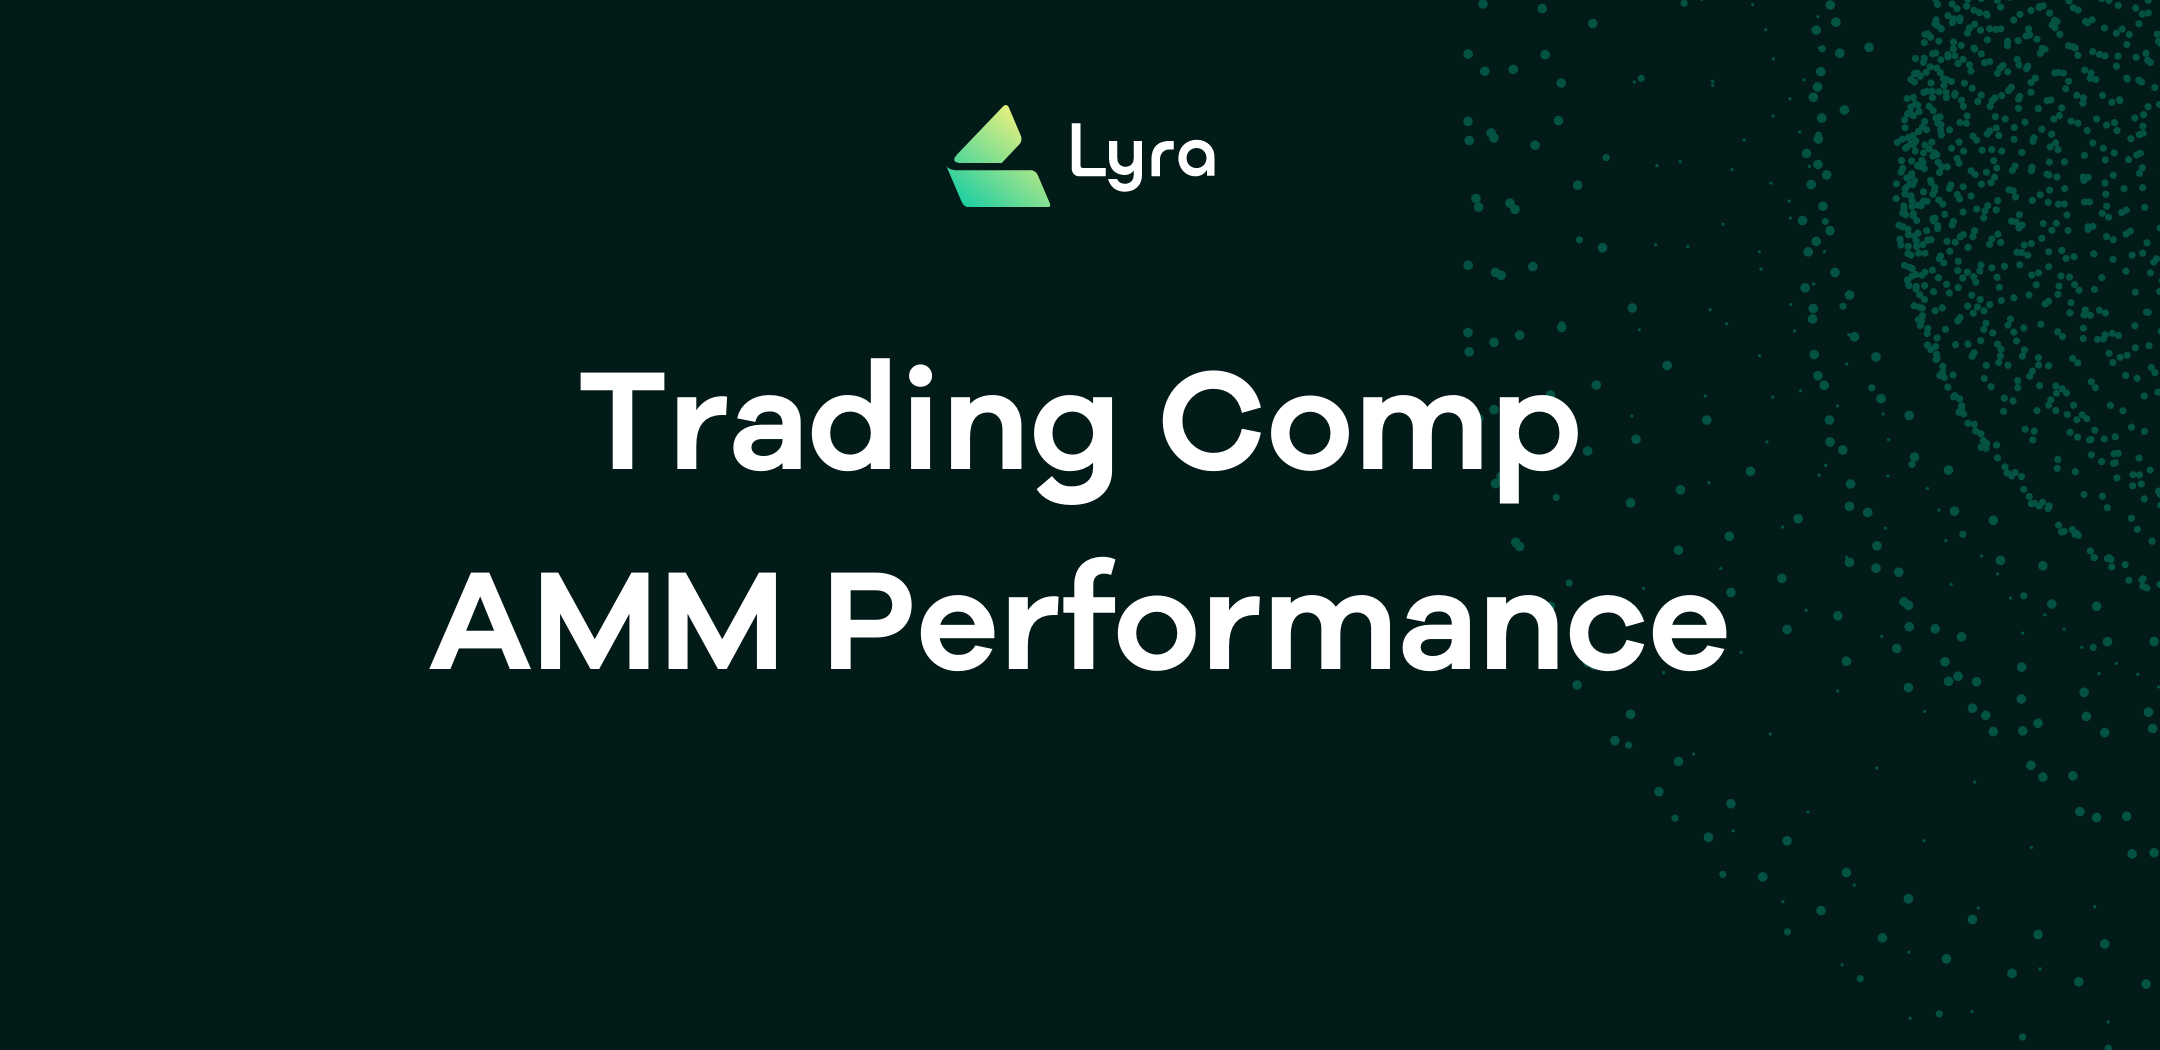 Trading Comp AMM Performance